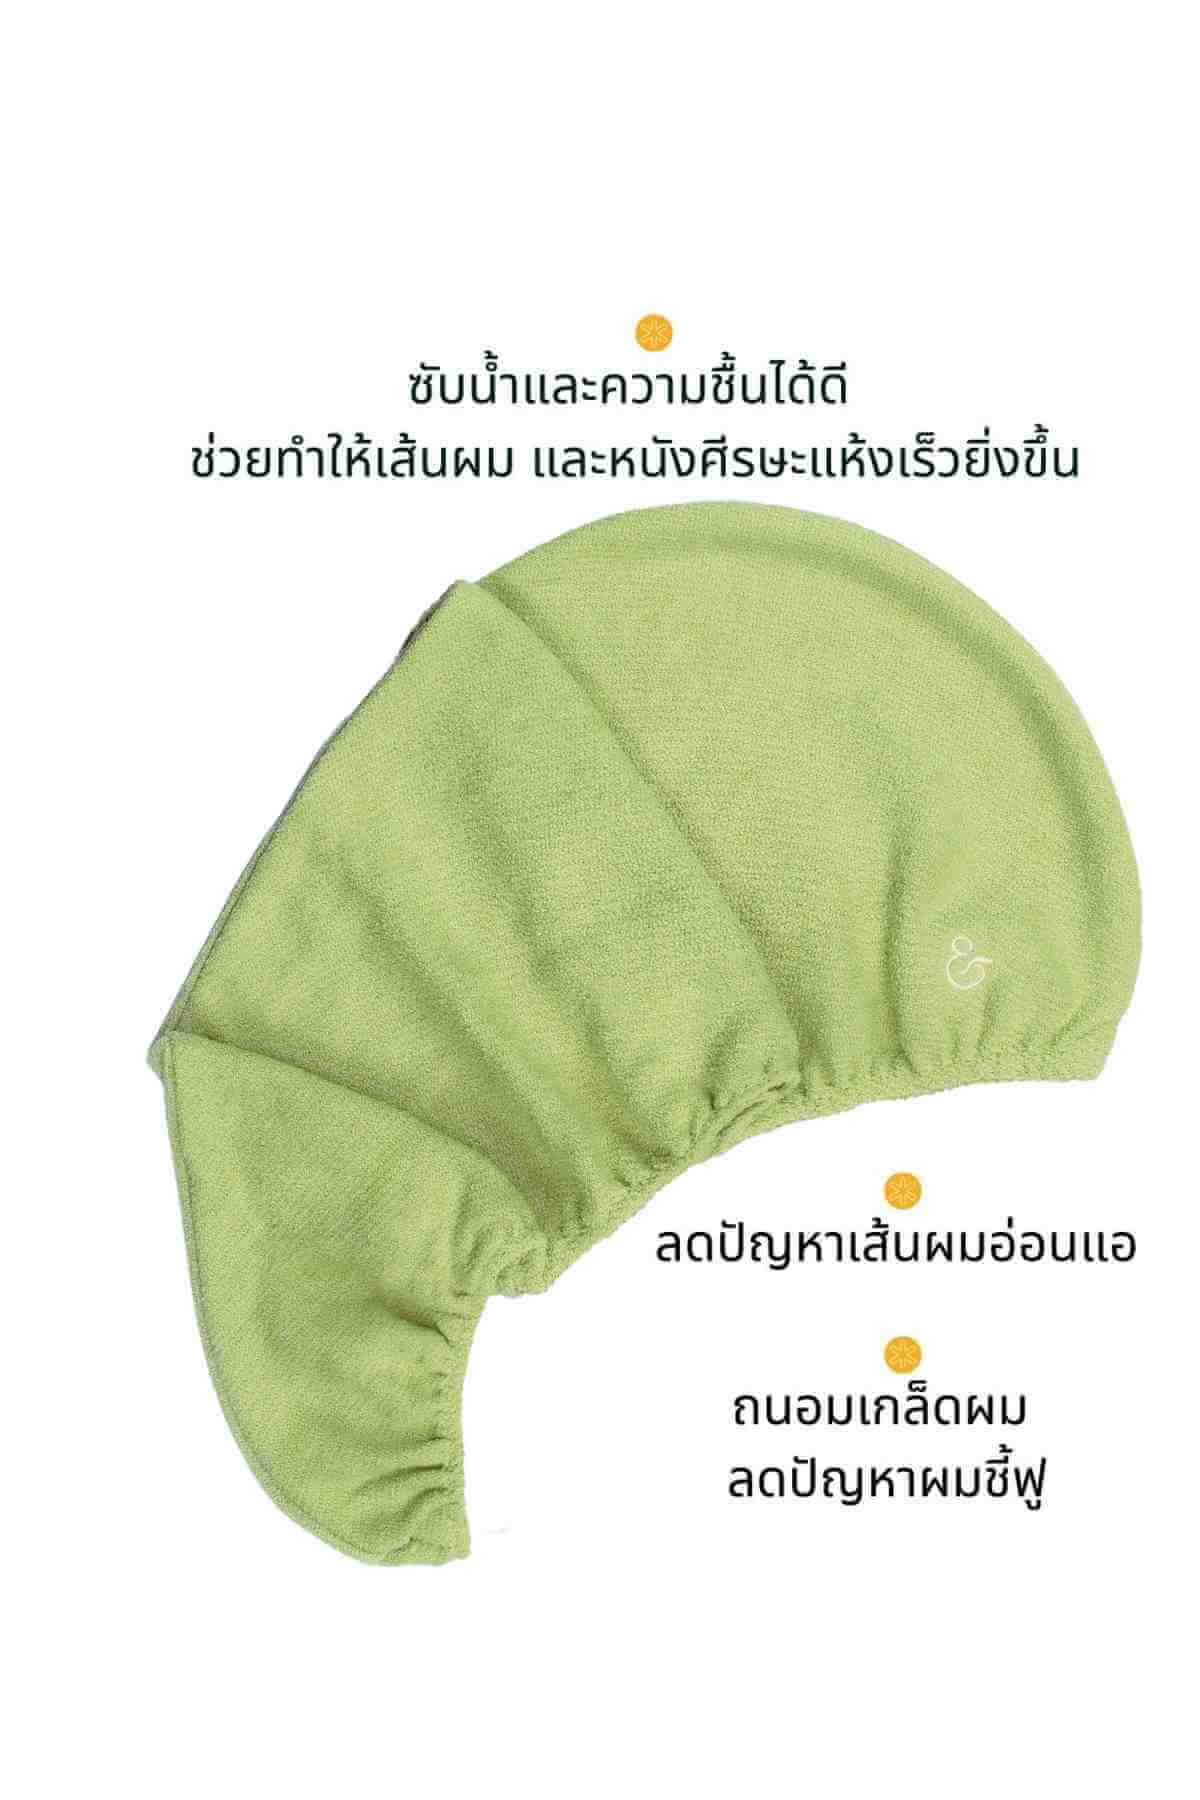 Microfiber Hair Turban Towel - Green - Avocado